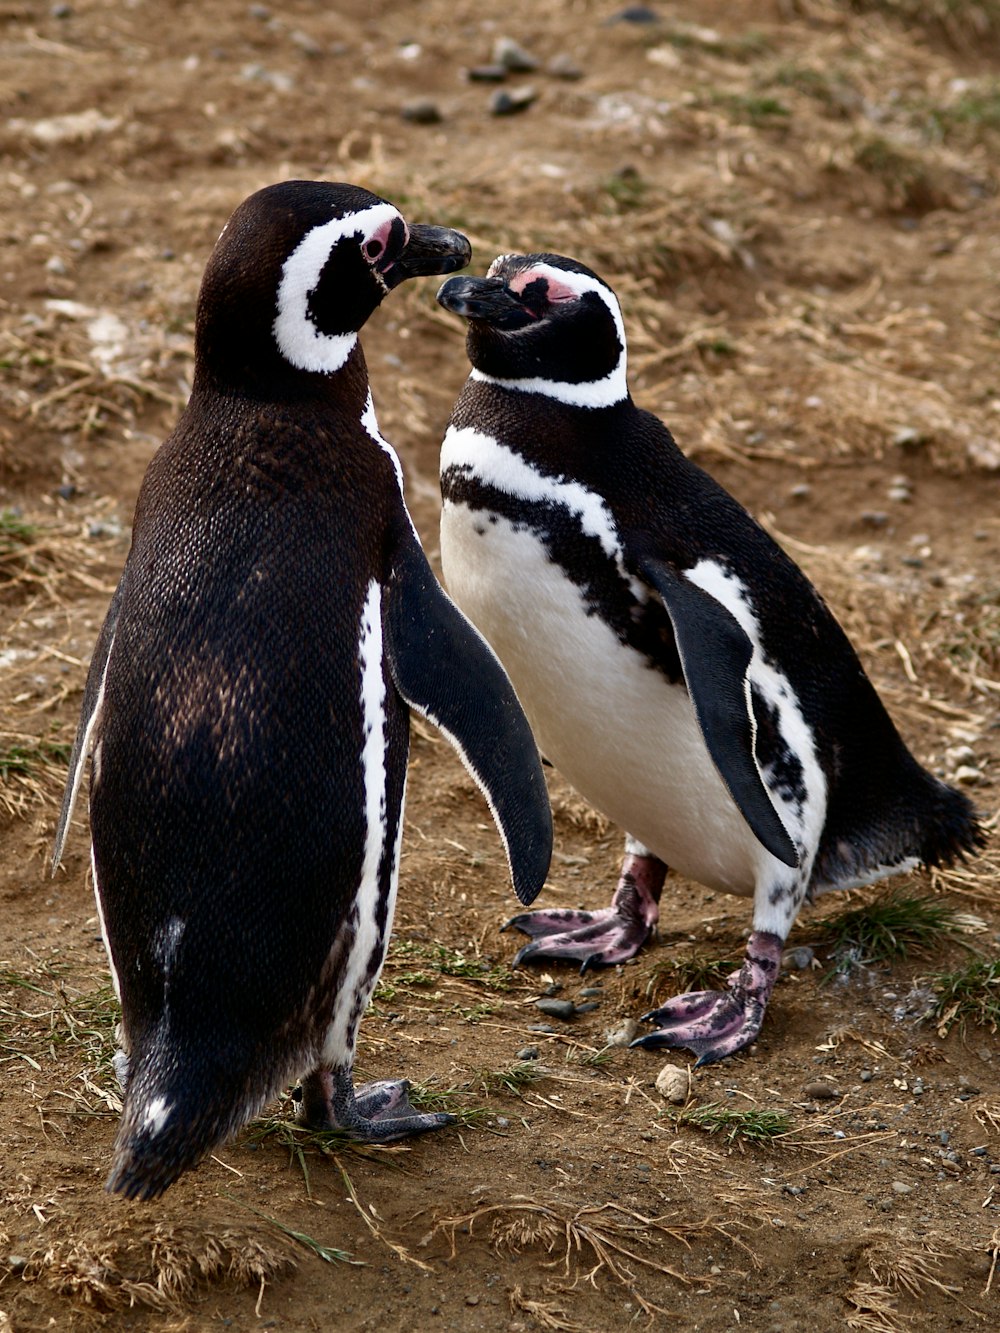 black and white penguin standing on brown soil during daytime